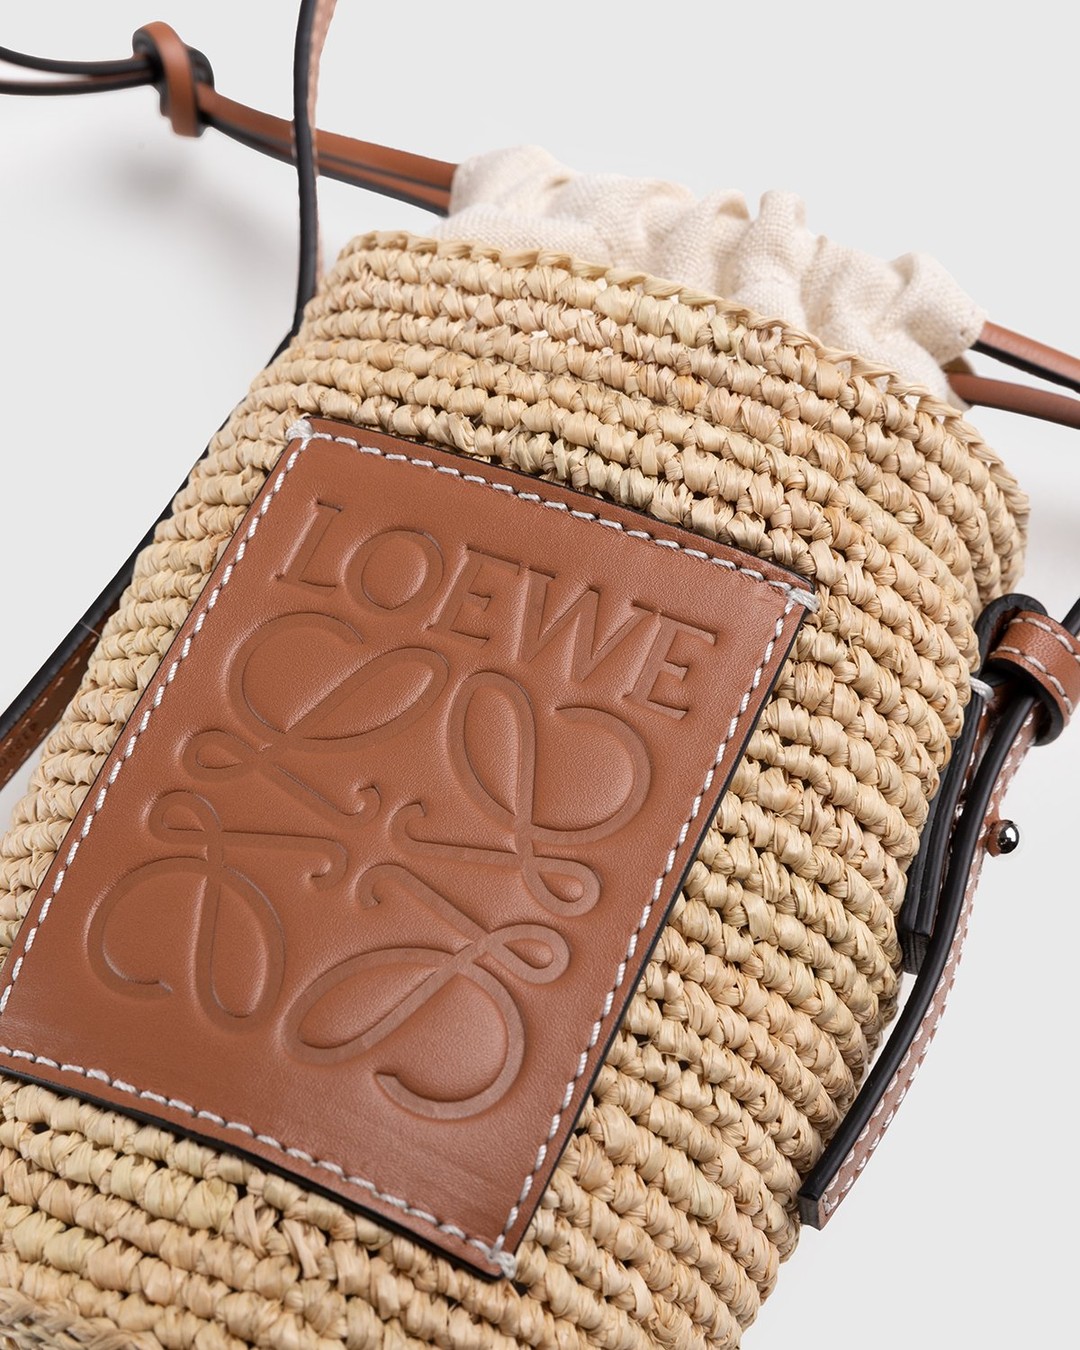 Loewe – Paula's Ibiza Cylinder Pocket Bag Natural/Tan - Shoulder Bags - Brown - Image 3